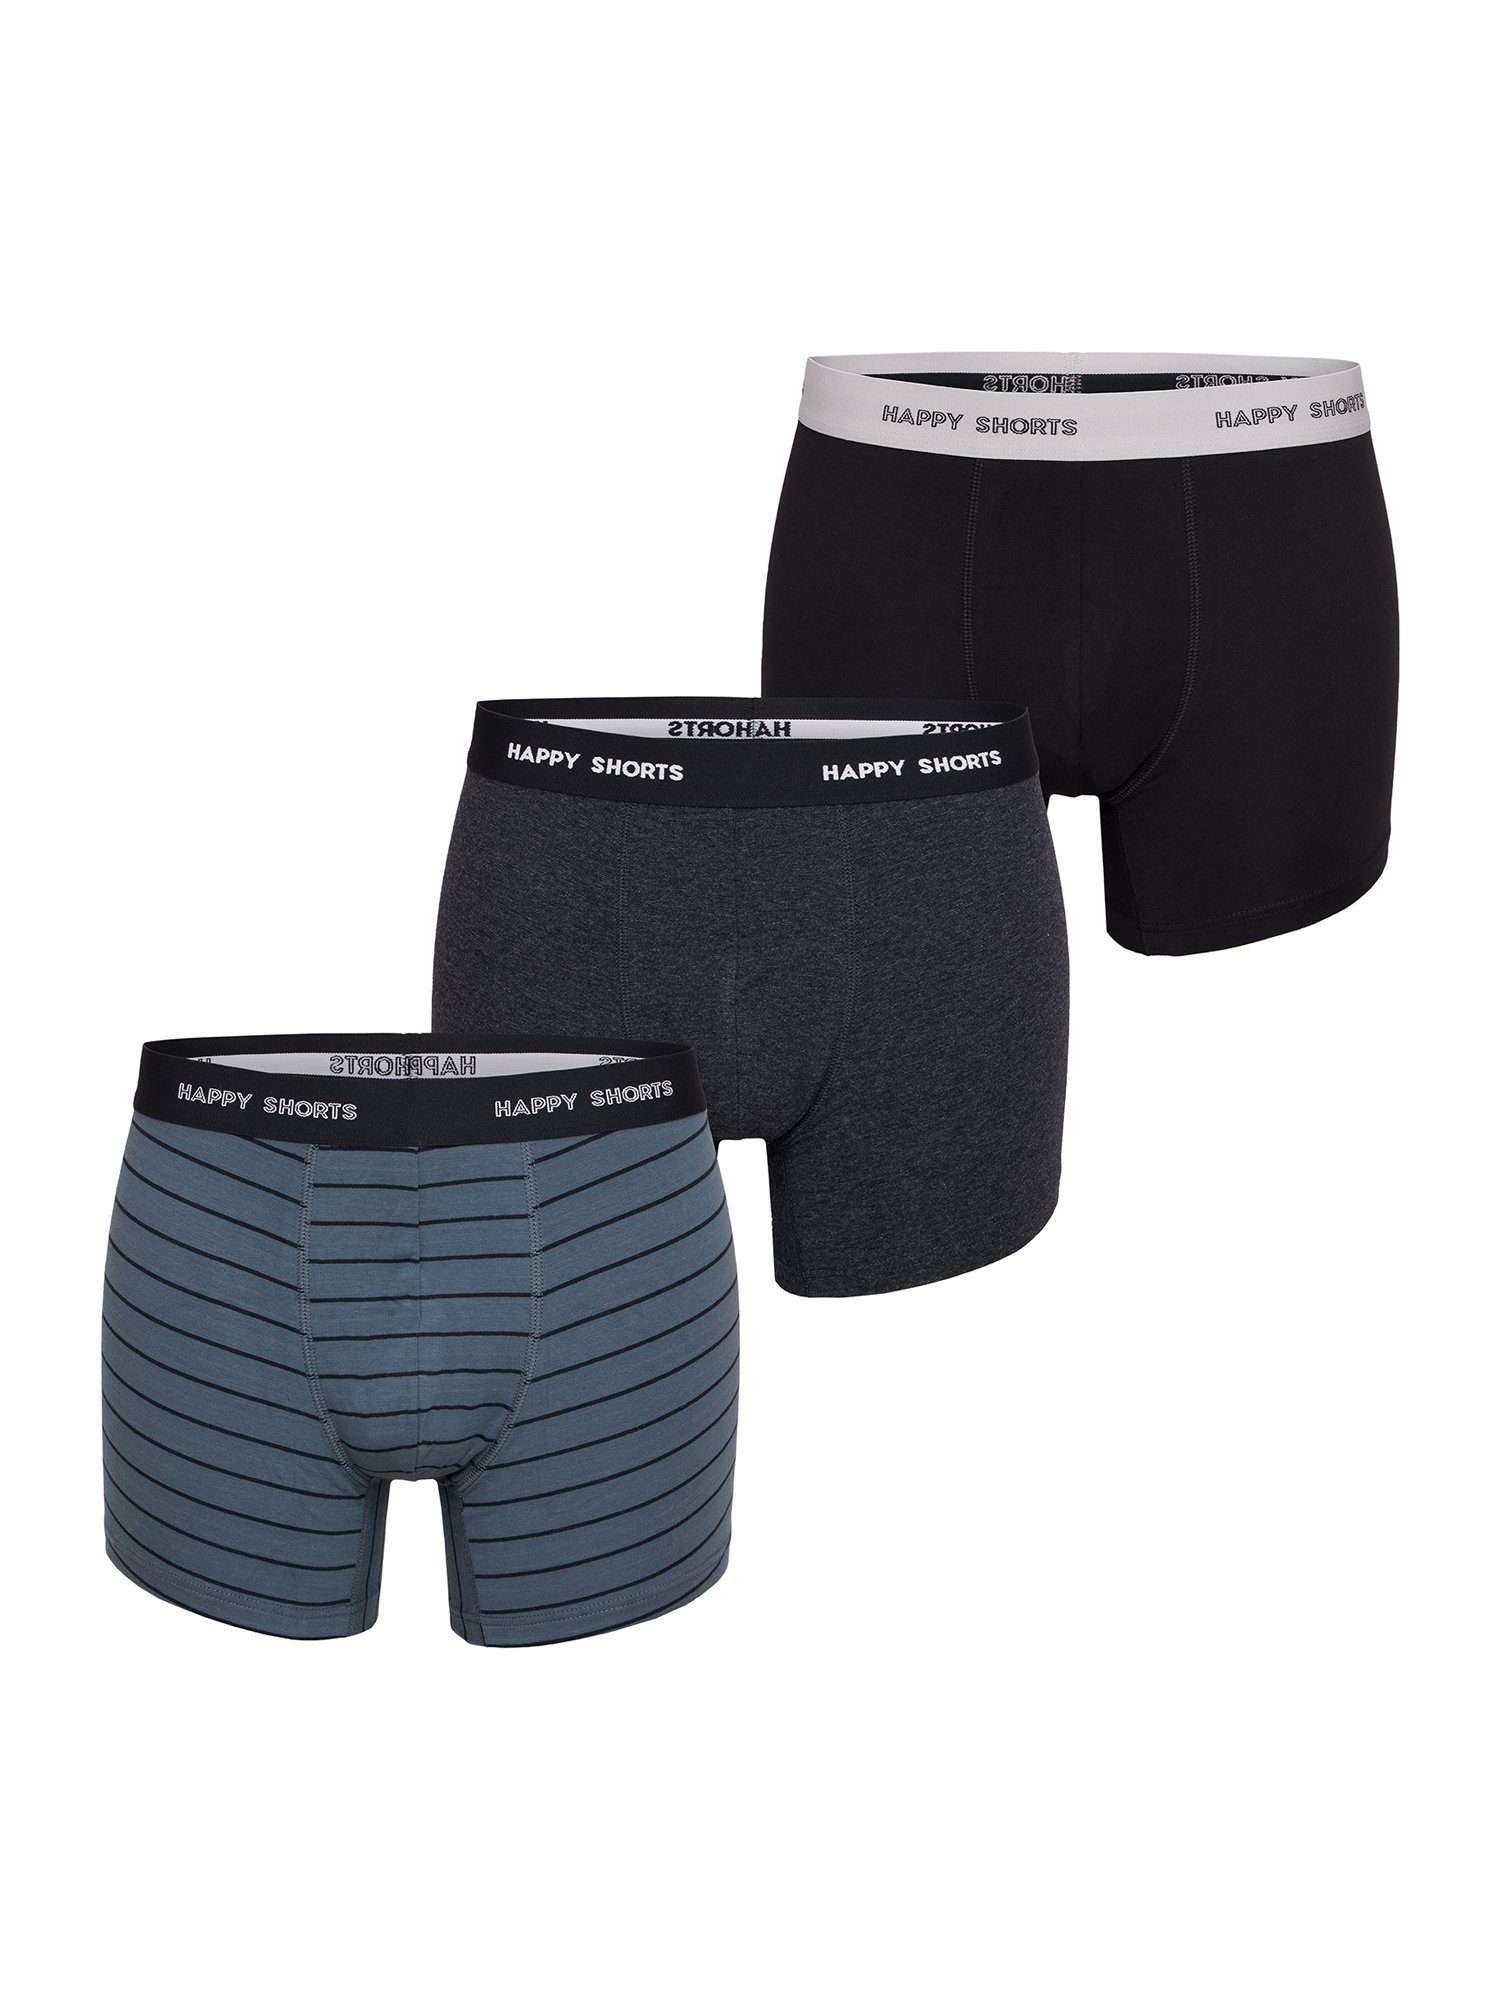 HAPPY SHORTS Retro Pants Motive (3-St) Retro-Boxer unterhose männer Stripes